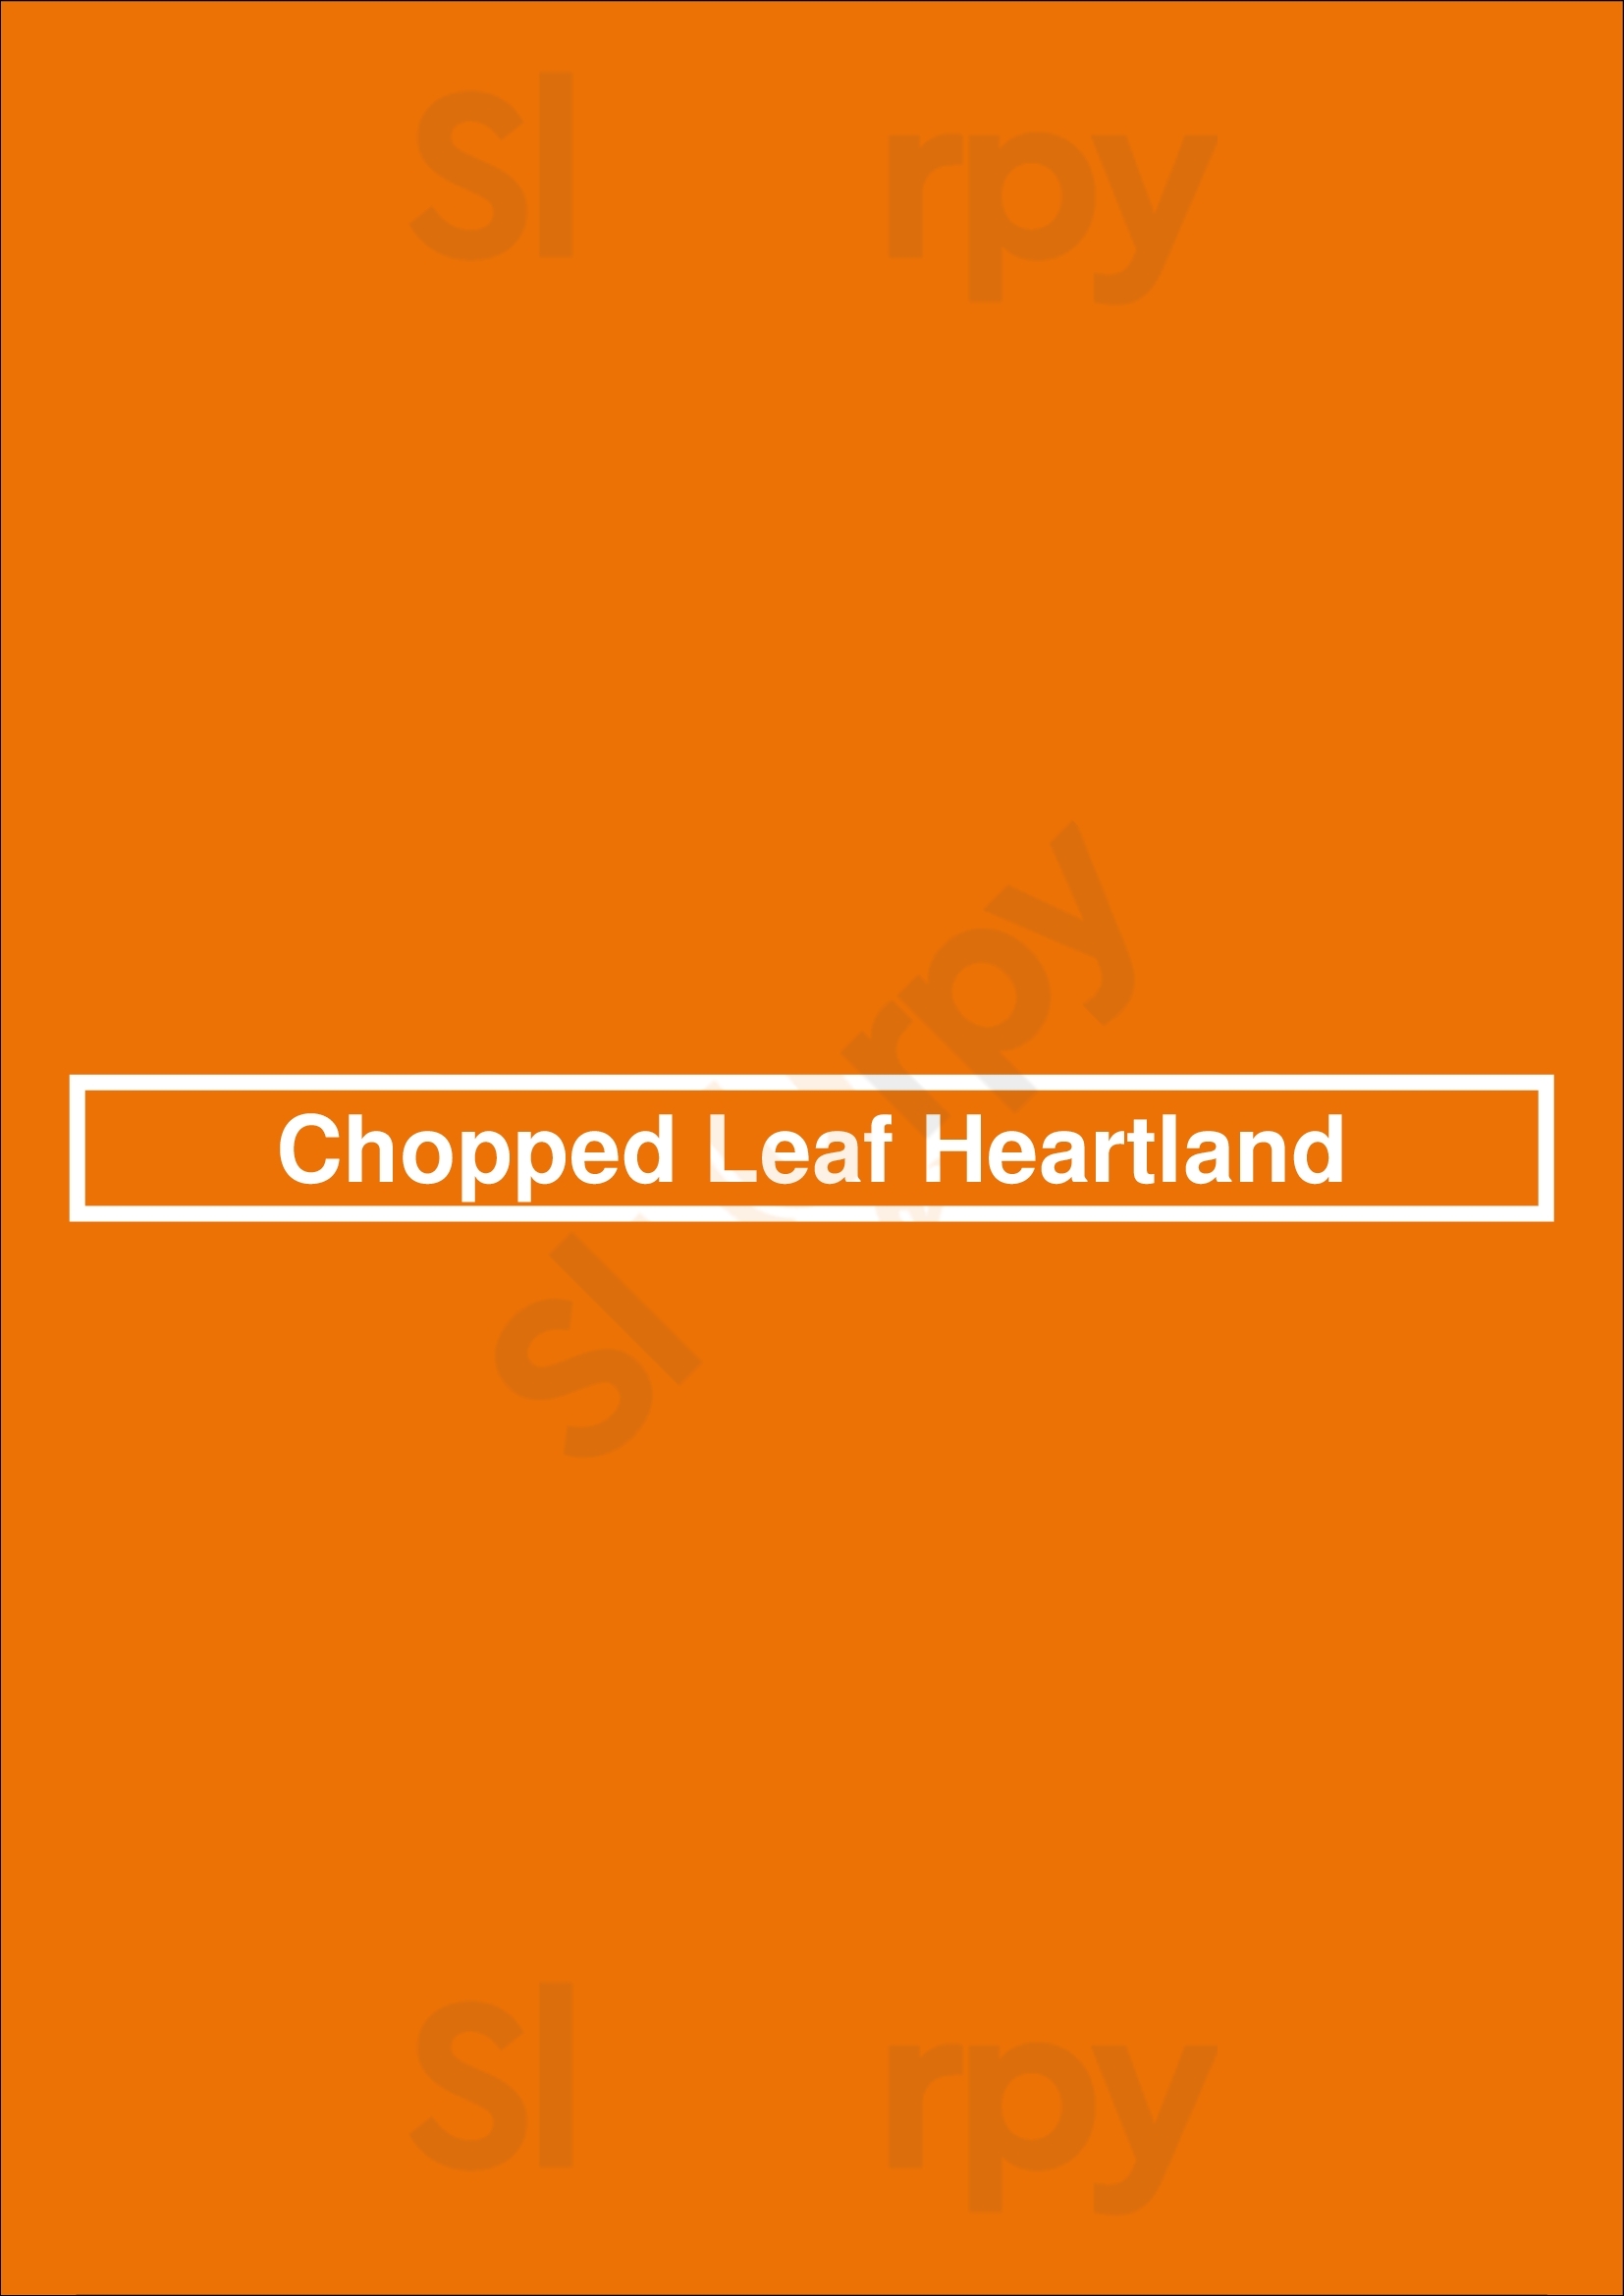 Chopped Leaf Heartland Mississauga Menu - 1